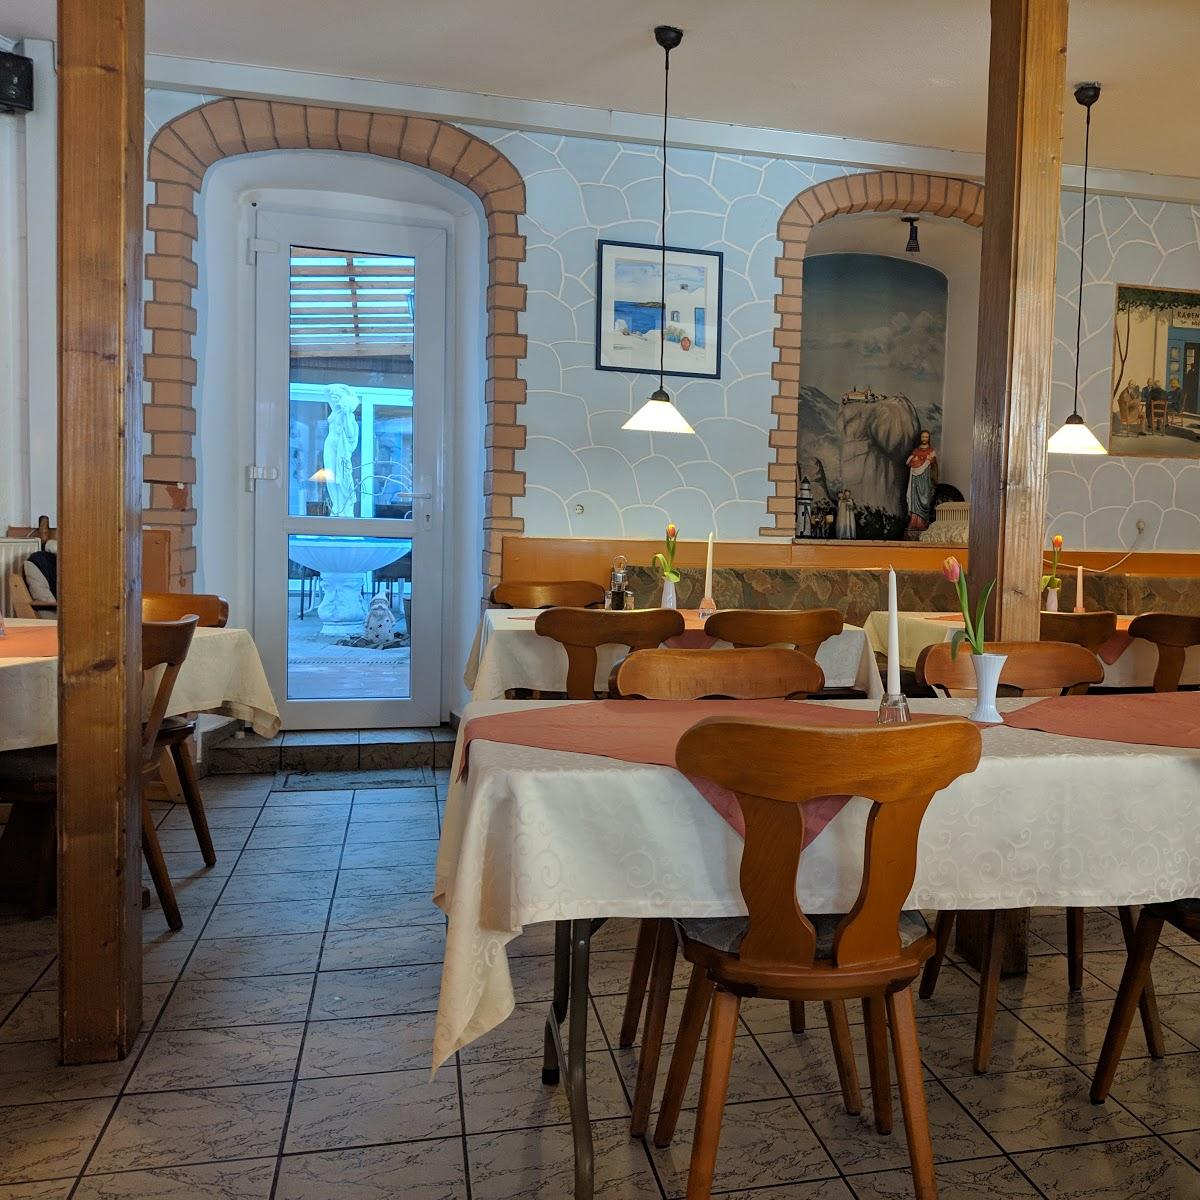 Restaurant "Taverna Kostas mit Hotel" in Hof